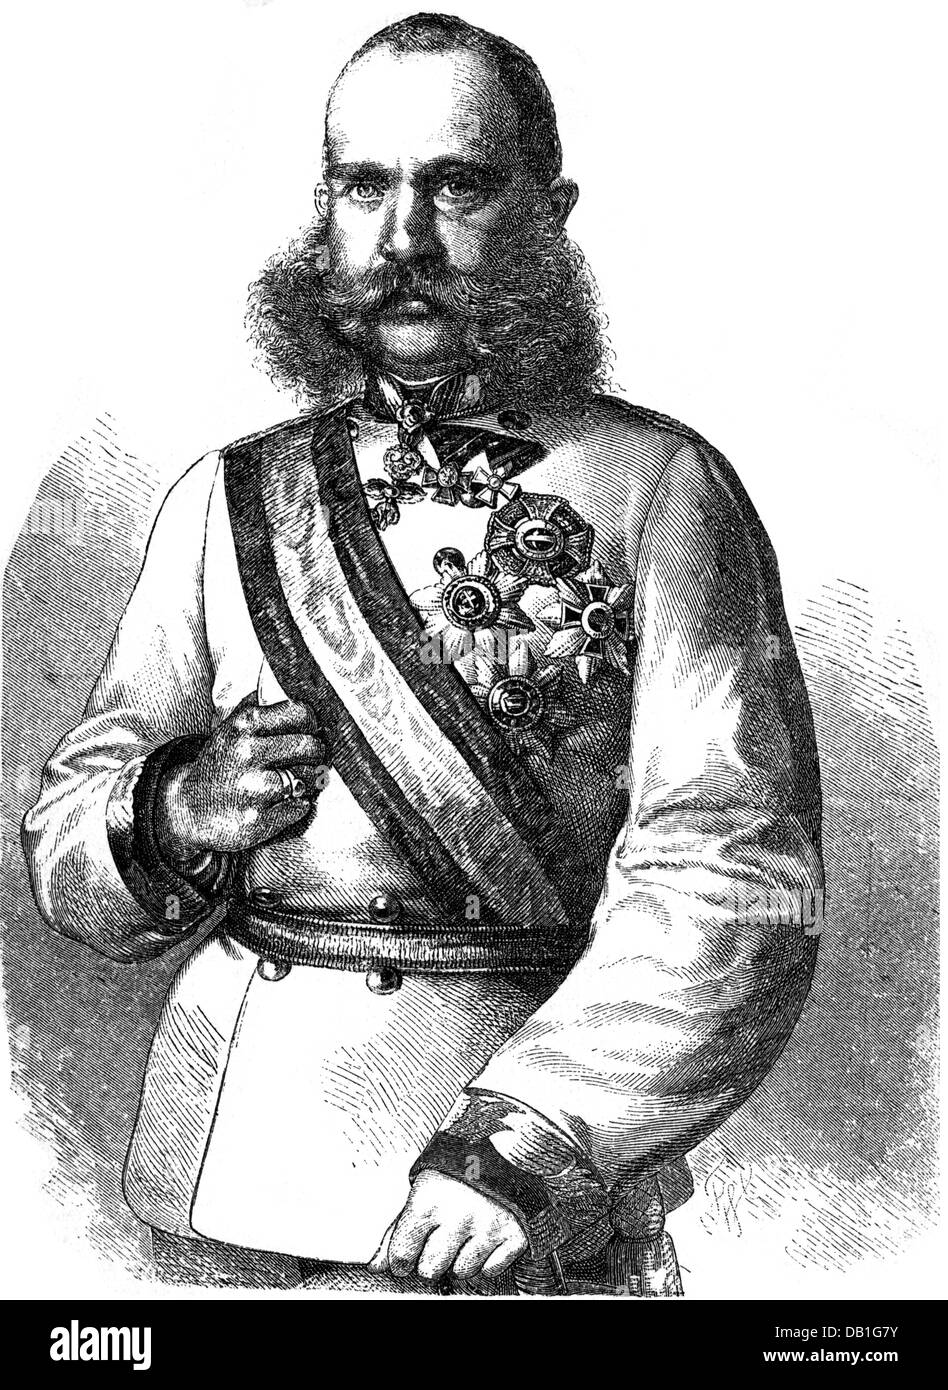 Franz Joseph I, 18.8.1830 - 21.11.1916, Emperor of Austria 2.12.1848 - 21.11.1916, half length, wood engraving, circa 1870, Stock Photo